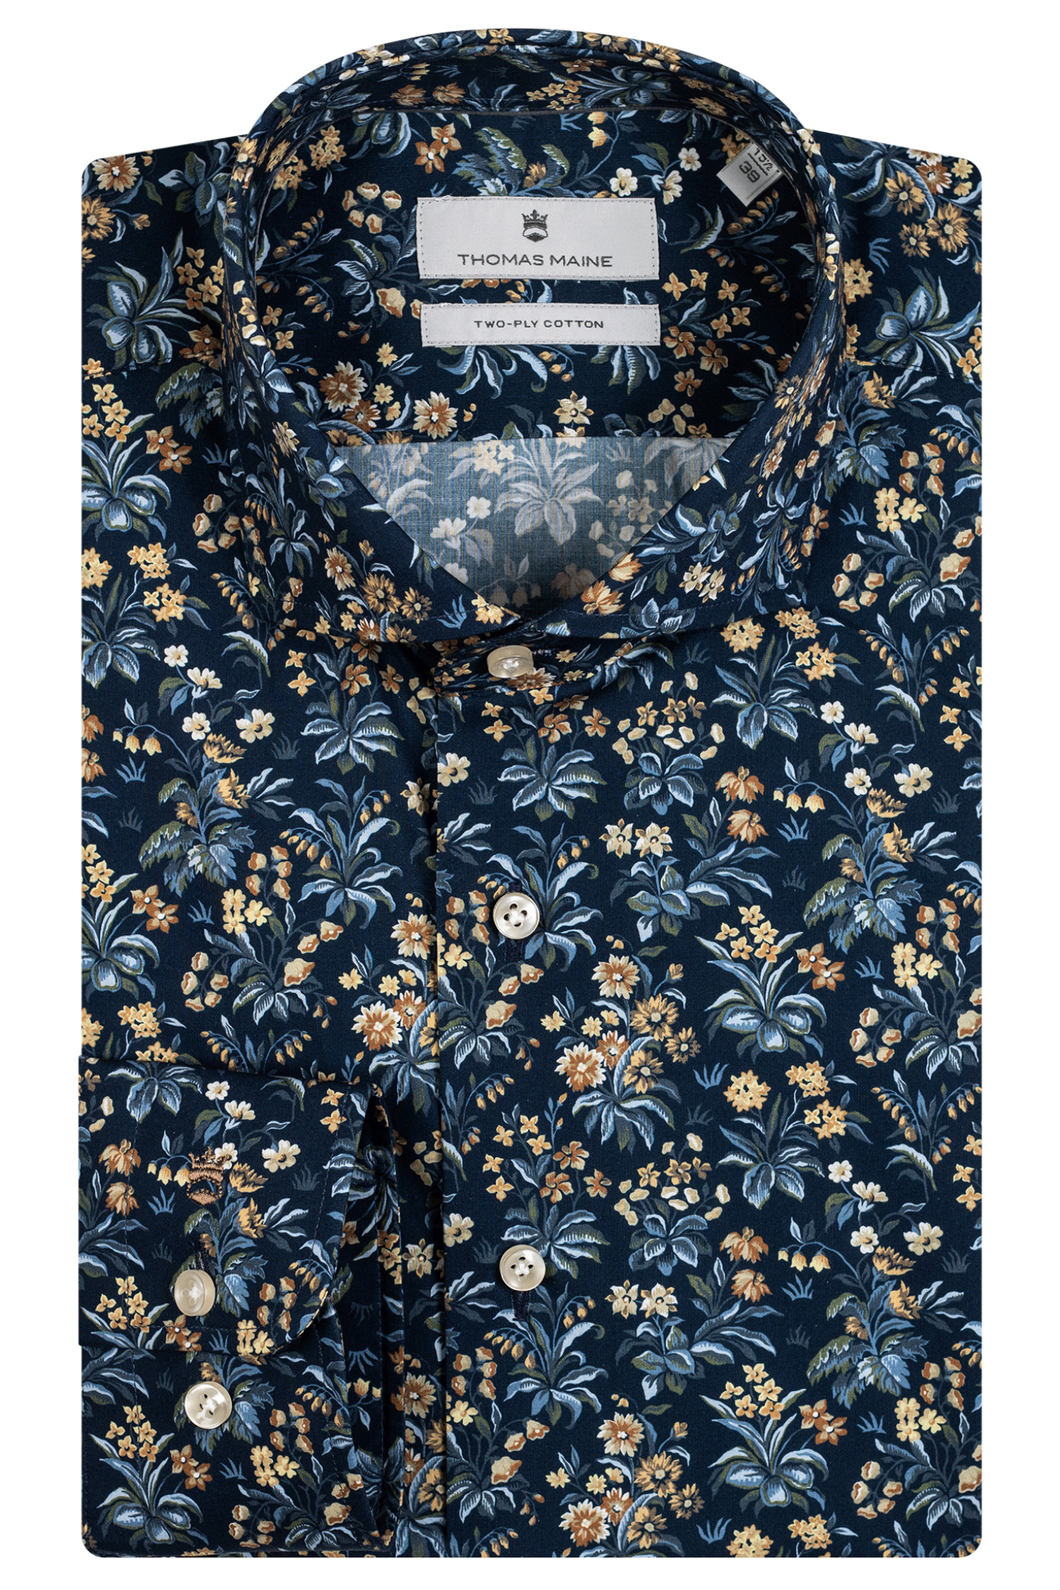 Thomas Maine Floral Print Shirt - Navy